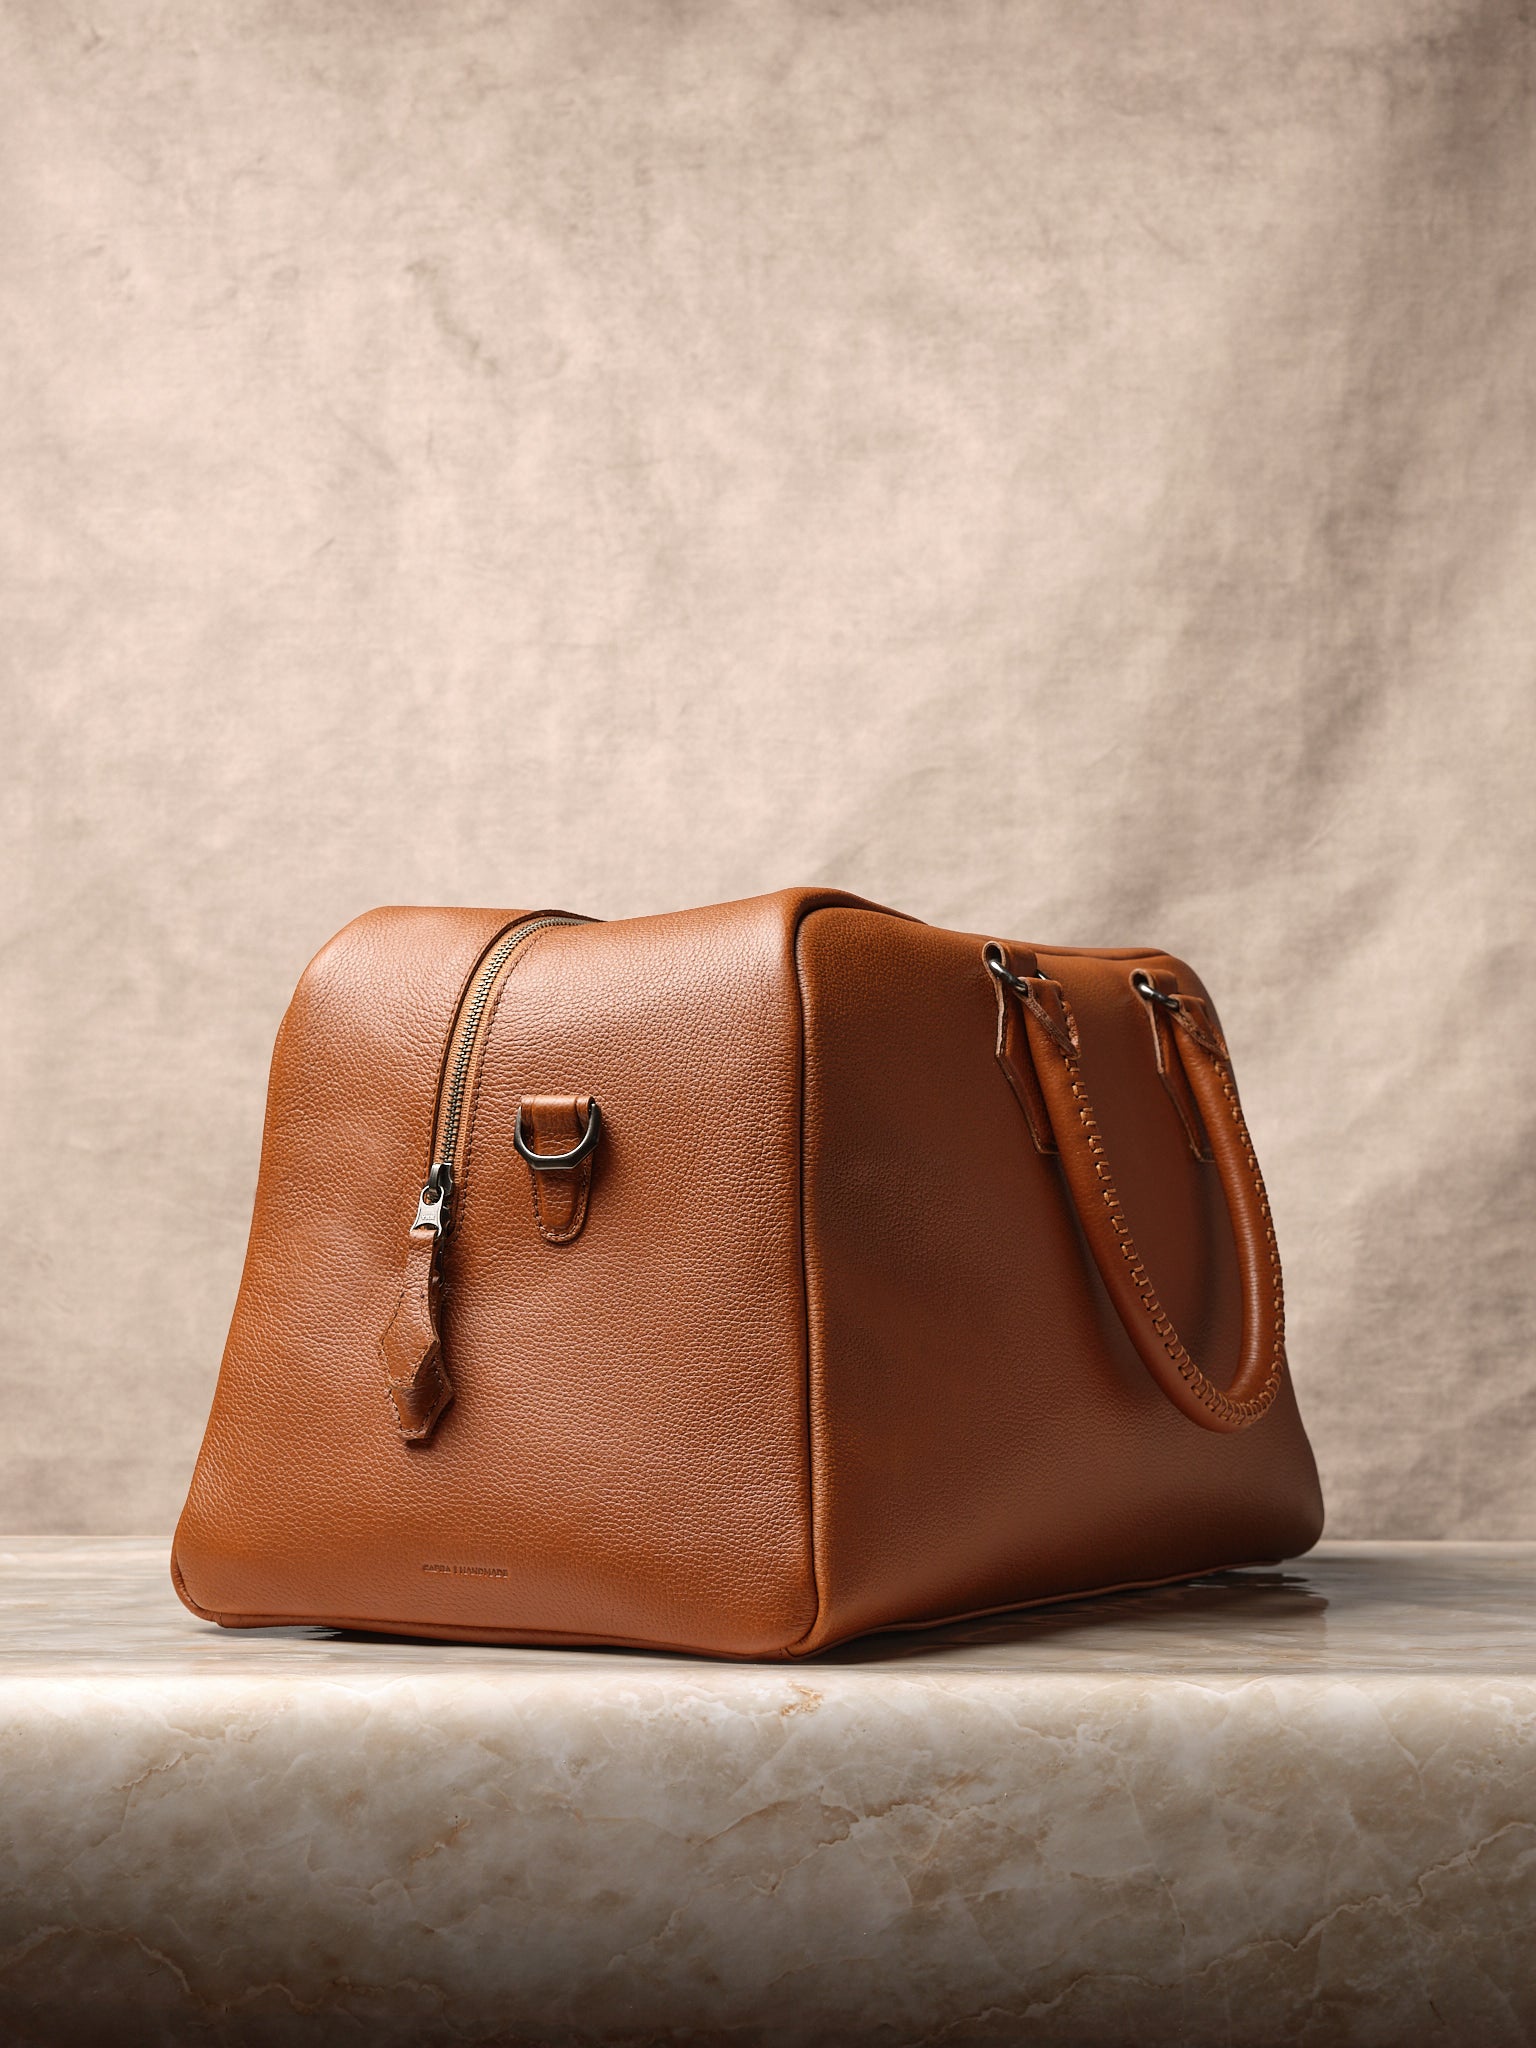 Symmetrical Trapezoid Bag. Mens Travel Duffle Bag Tan by Capra Leather